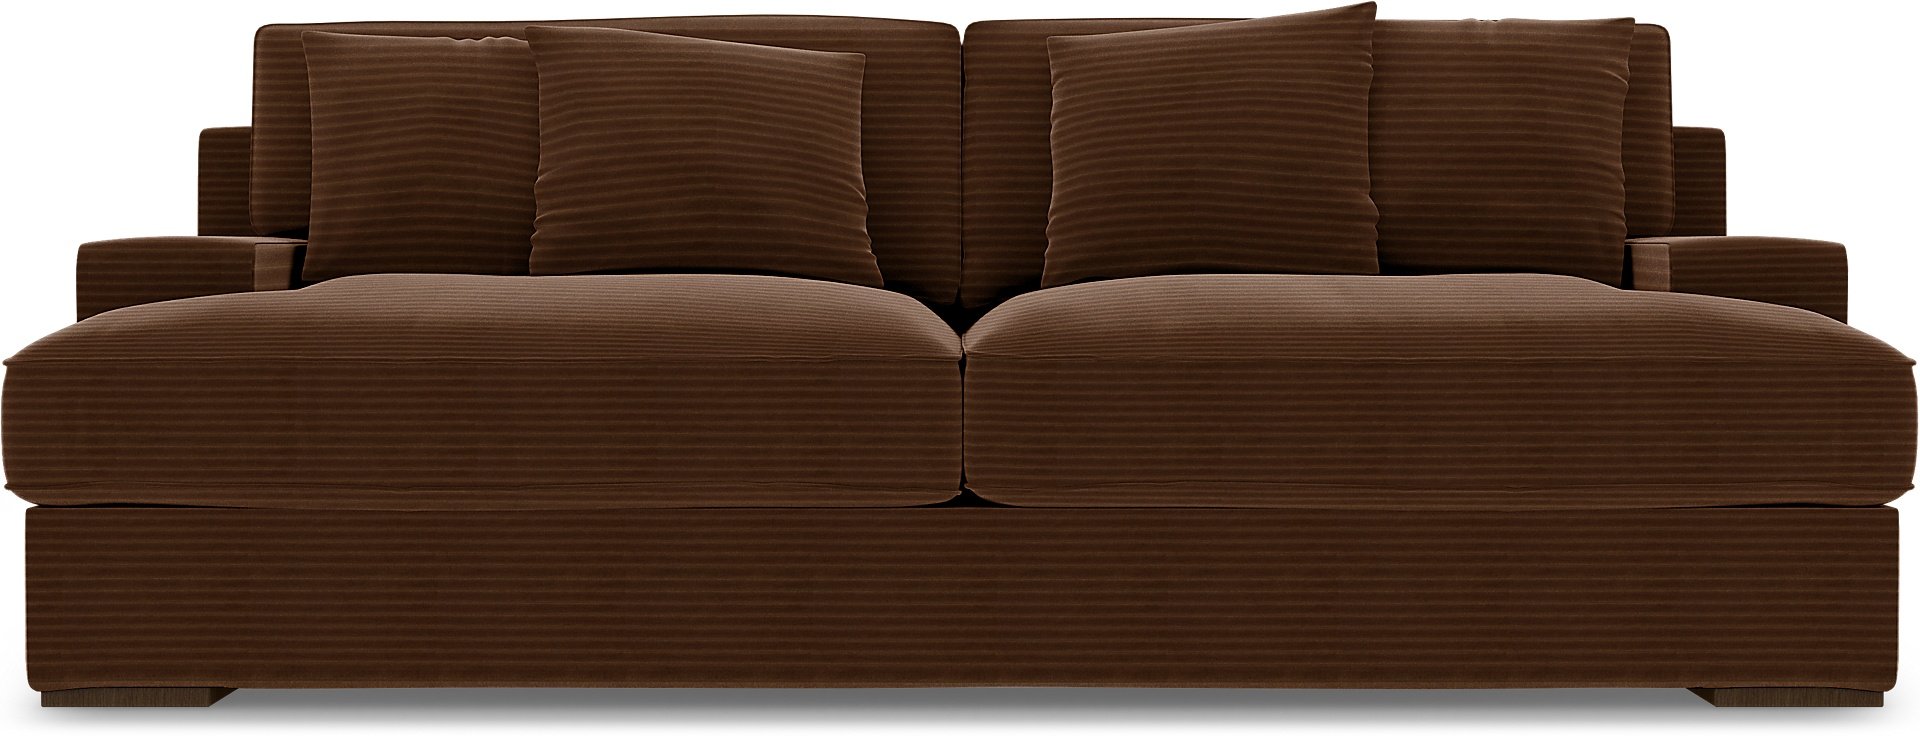 IKEA - Goteborg 3 Seater Sofa Cover, Chocolate Brown, Corduroy - Bemz